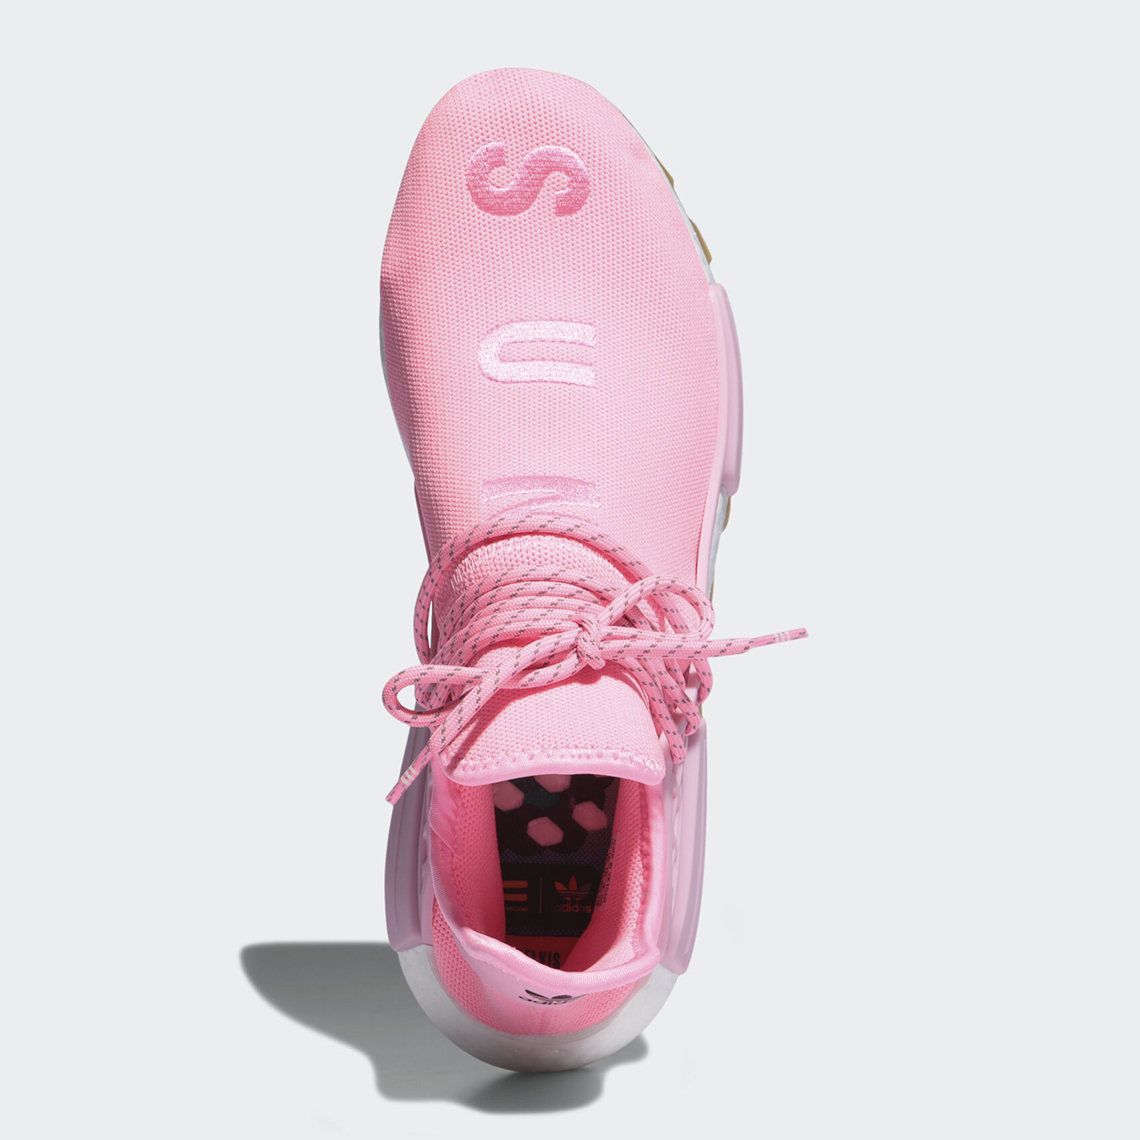 adidas nmd hu trail pink